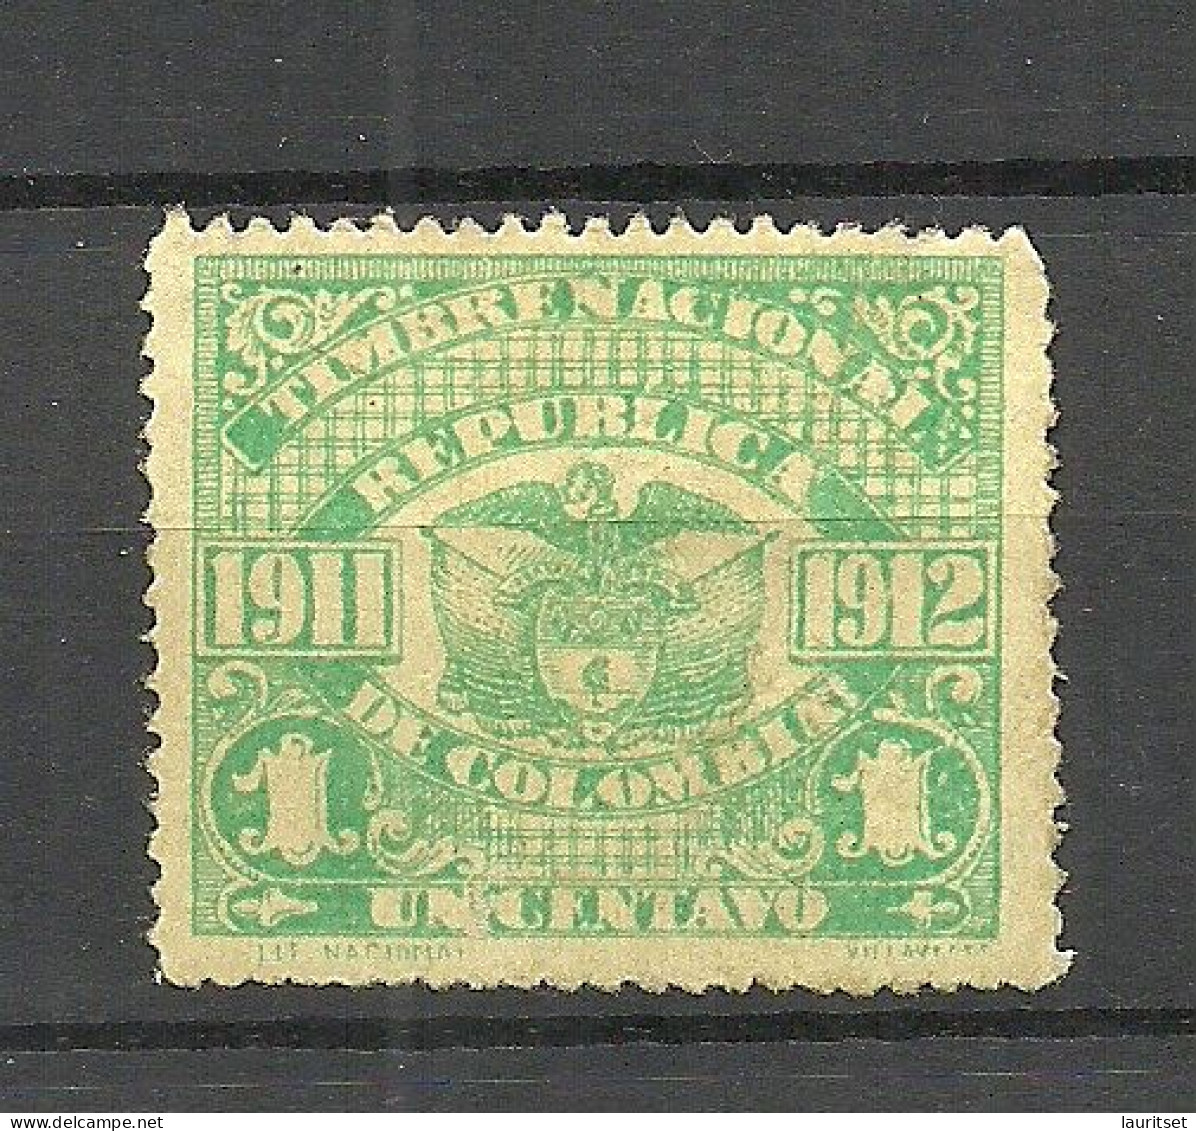 COLOMBIA 1911/1912 Timbre Nacional Revenue Taxe Fiscal Tax 1 C. * - Colombia